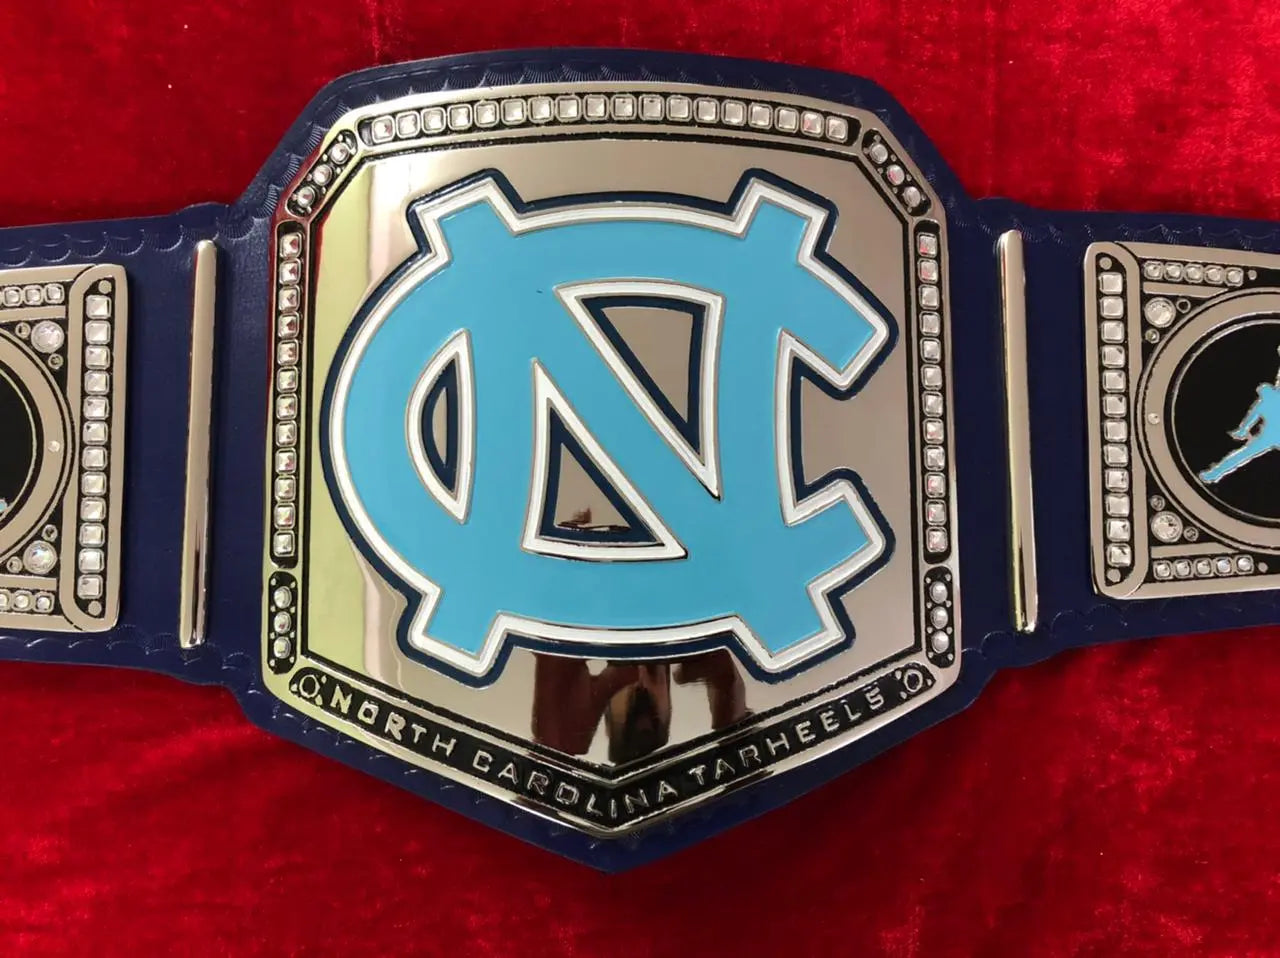 UNC North Carolina Tar Heels Championship Belt